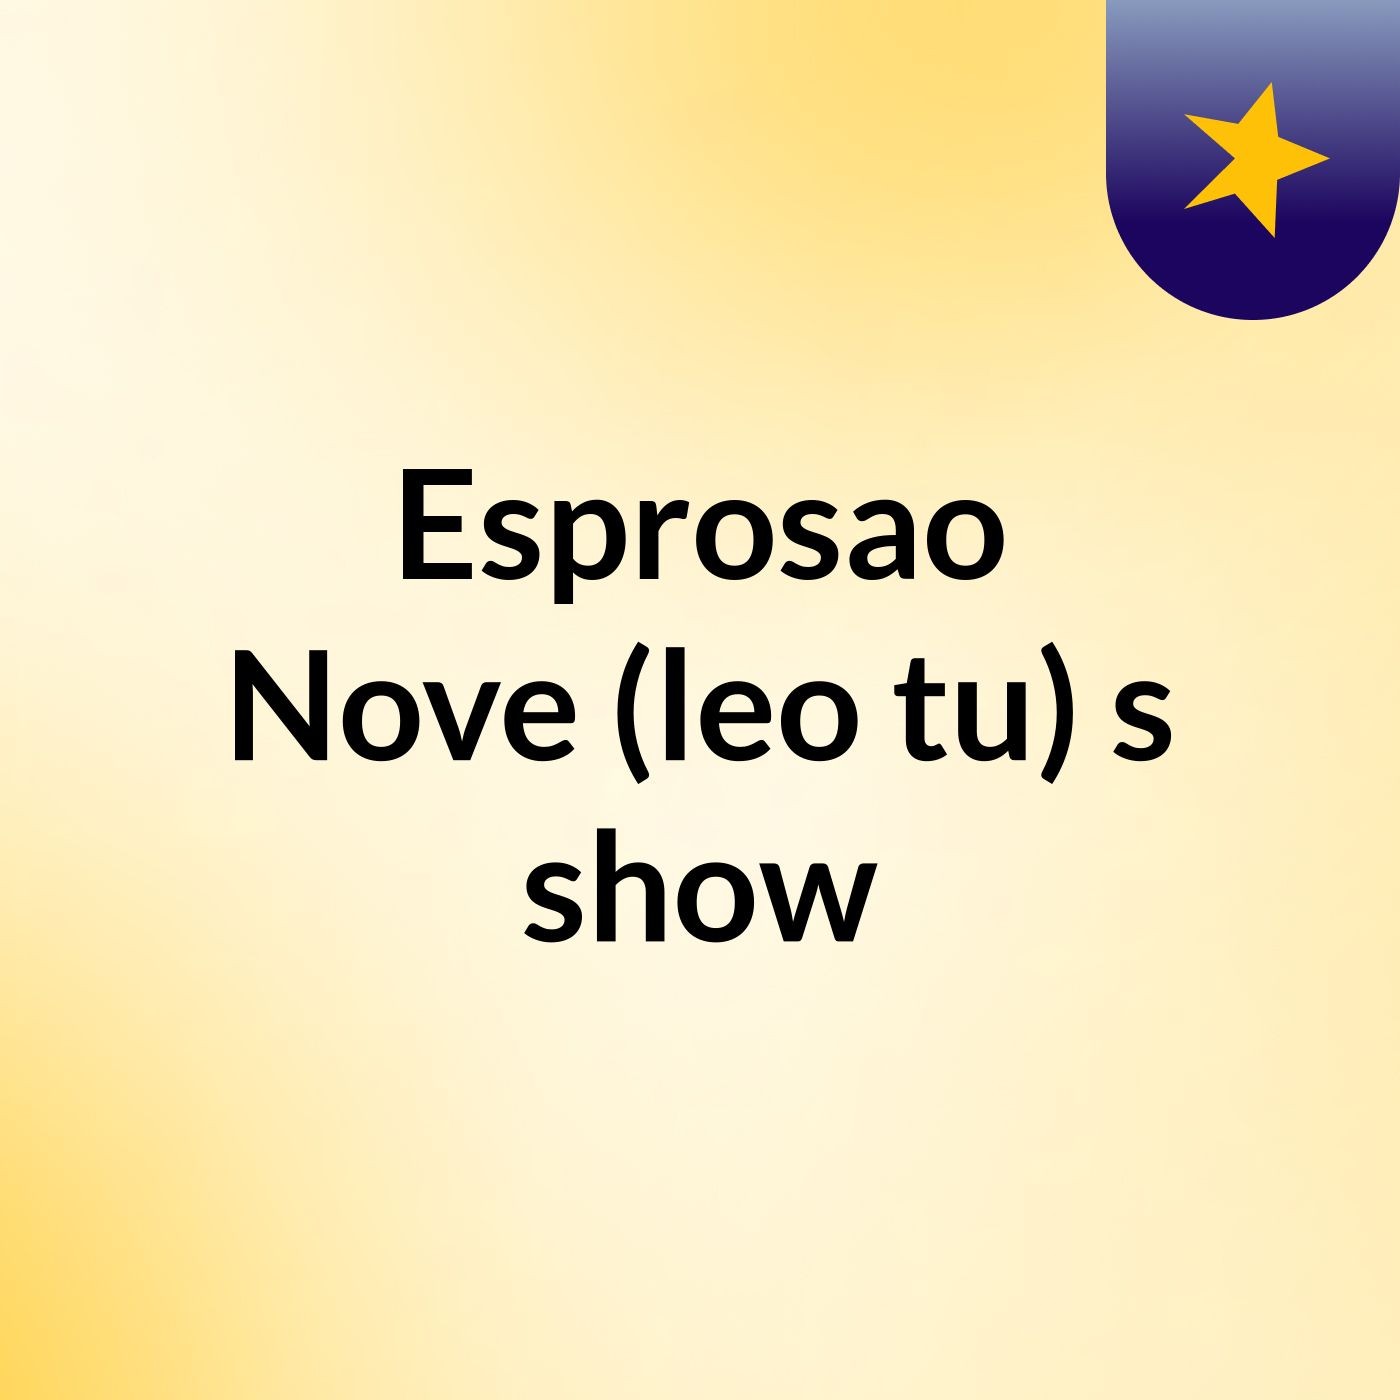 Esprosao Nove (leo tu)'s show